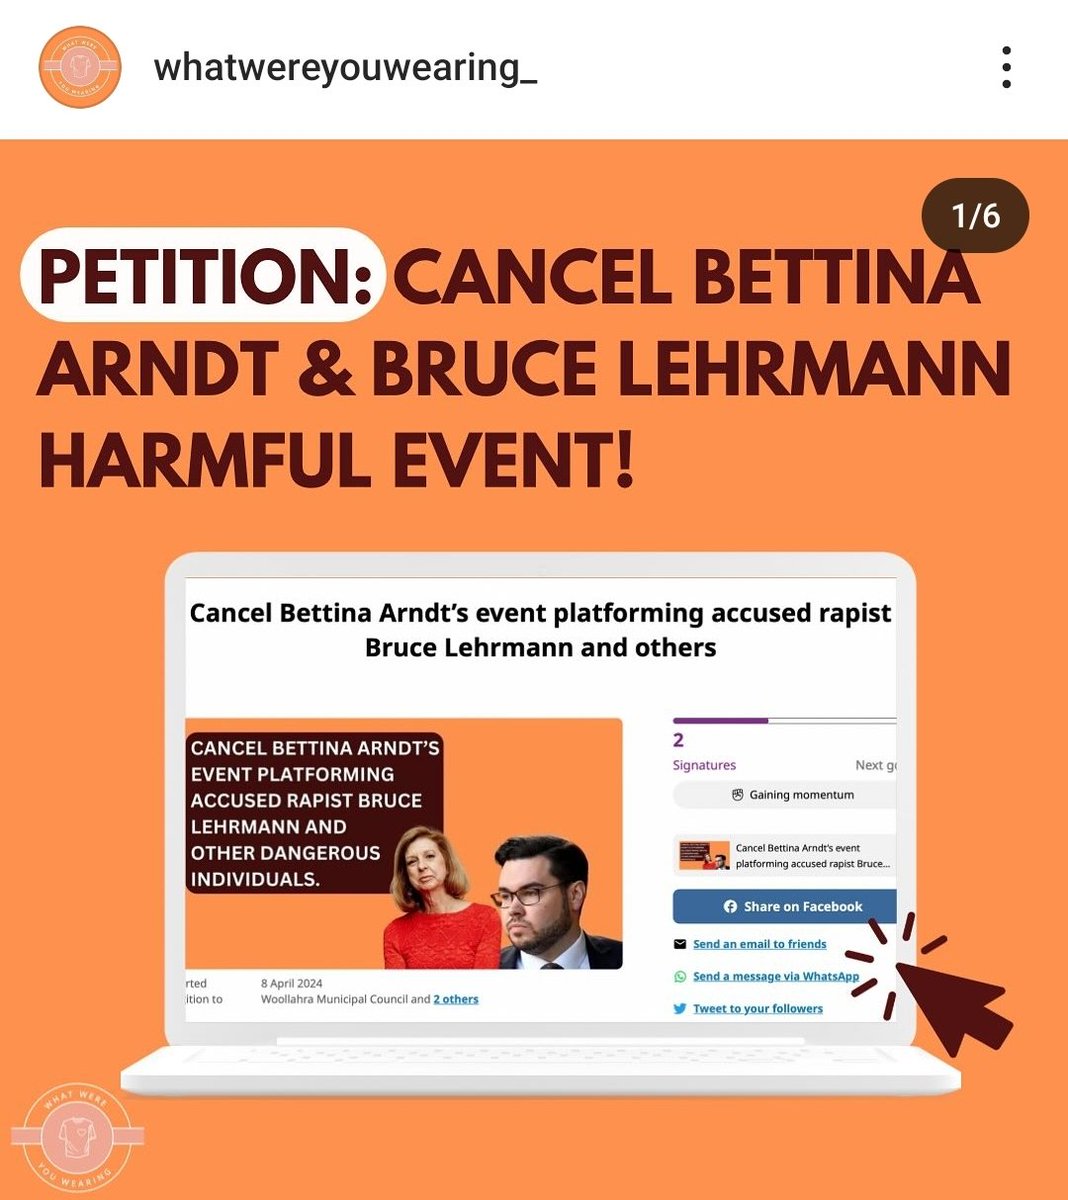 Perpetrator's don't deserve platforms.
Sign the petition here: shorturl.at/OPT47

#perpetratorsdontdeserveplatforms 
#brittanyhiggins #brucelehrmann